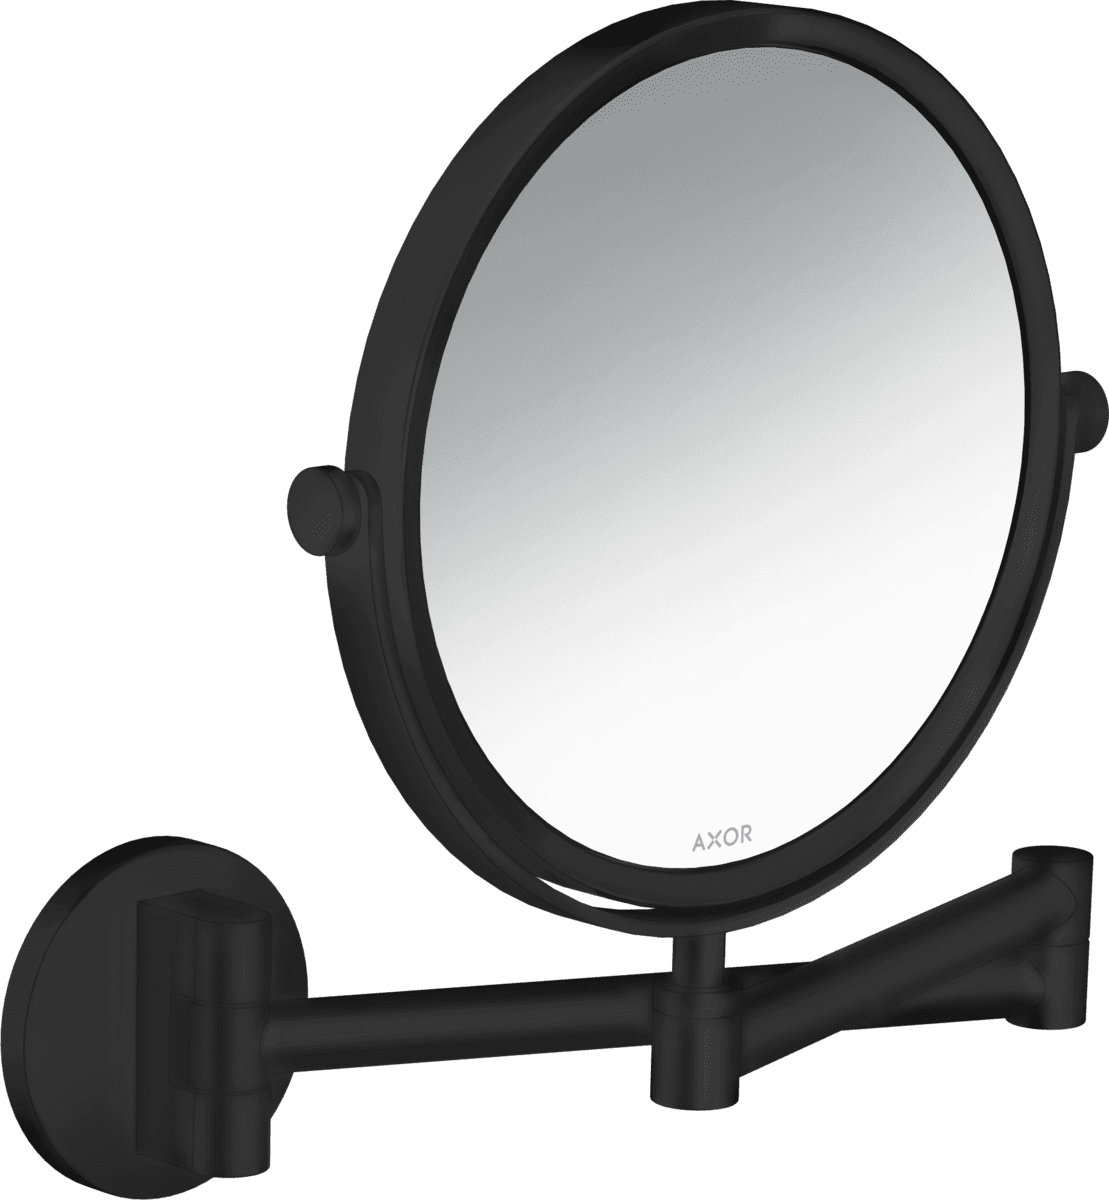 Picture of HANSGROHE AXOR Universal Circular Shaving mirror #42849670 - Matt Black